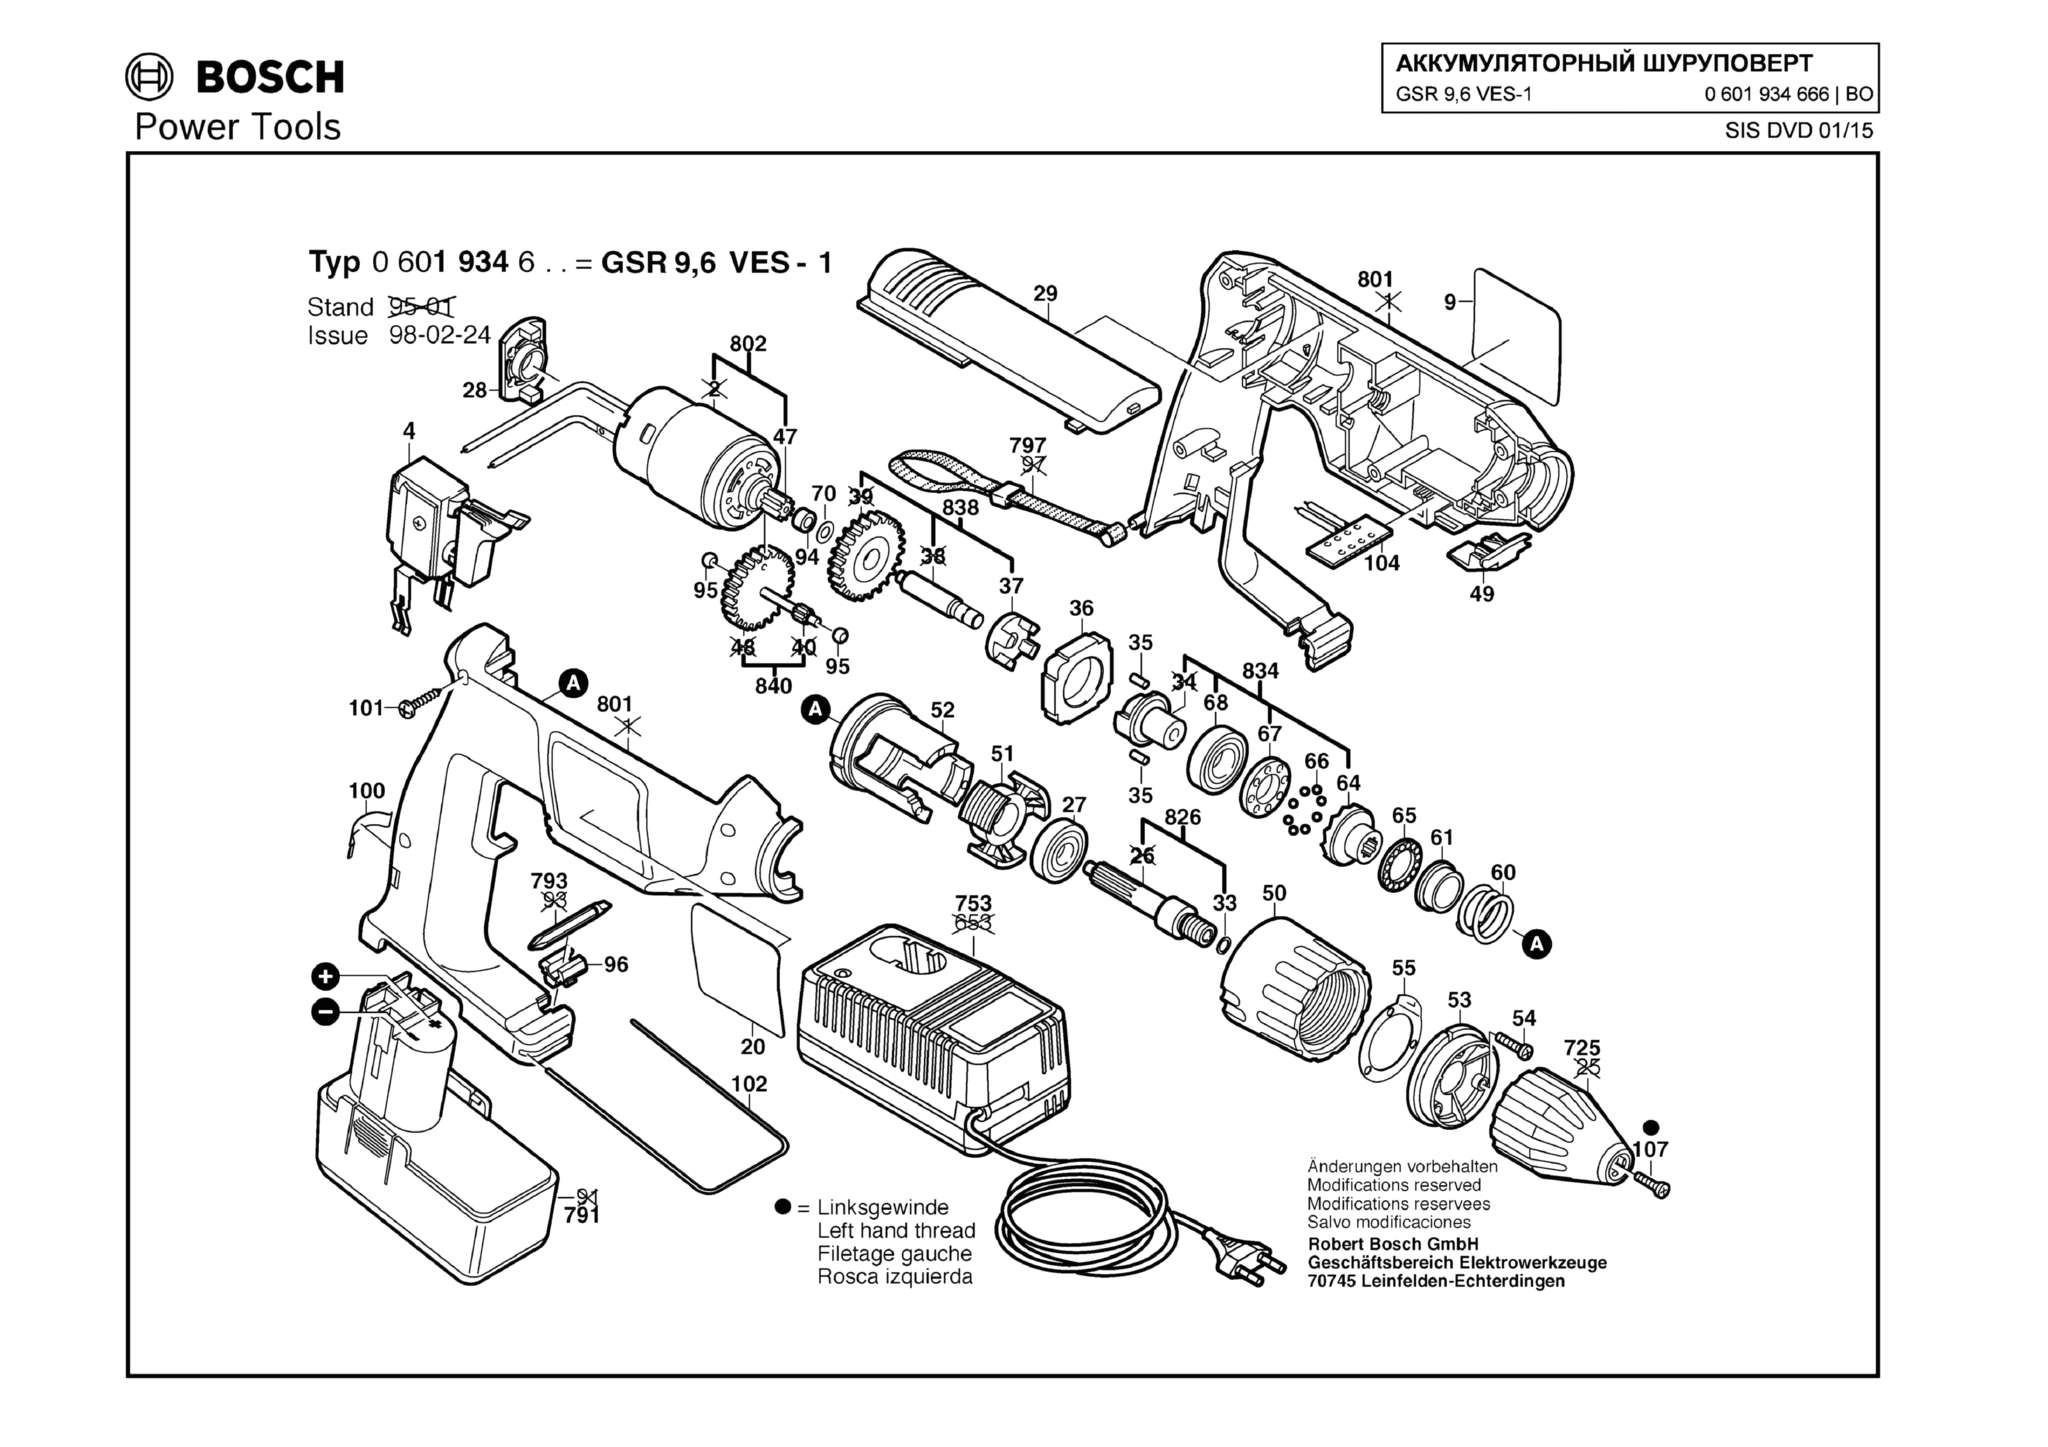 Запчасти, схема и деталировка Bosch GSR 9,6 VES-1 (ТИП 0601934666)